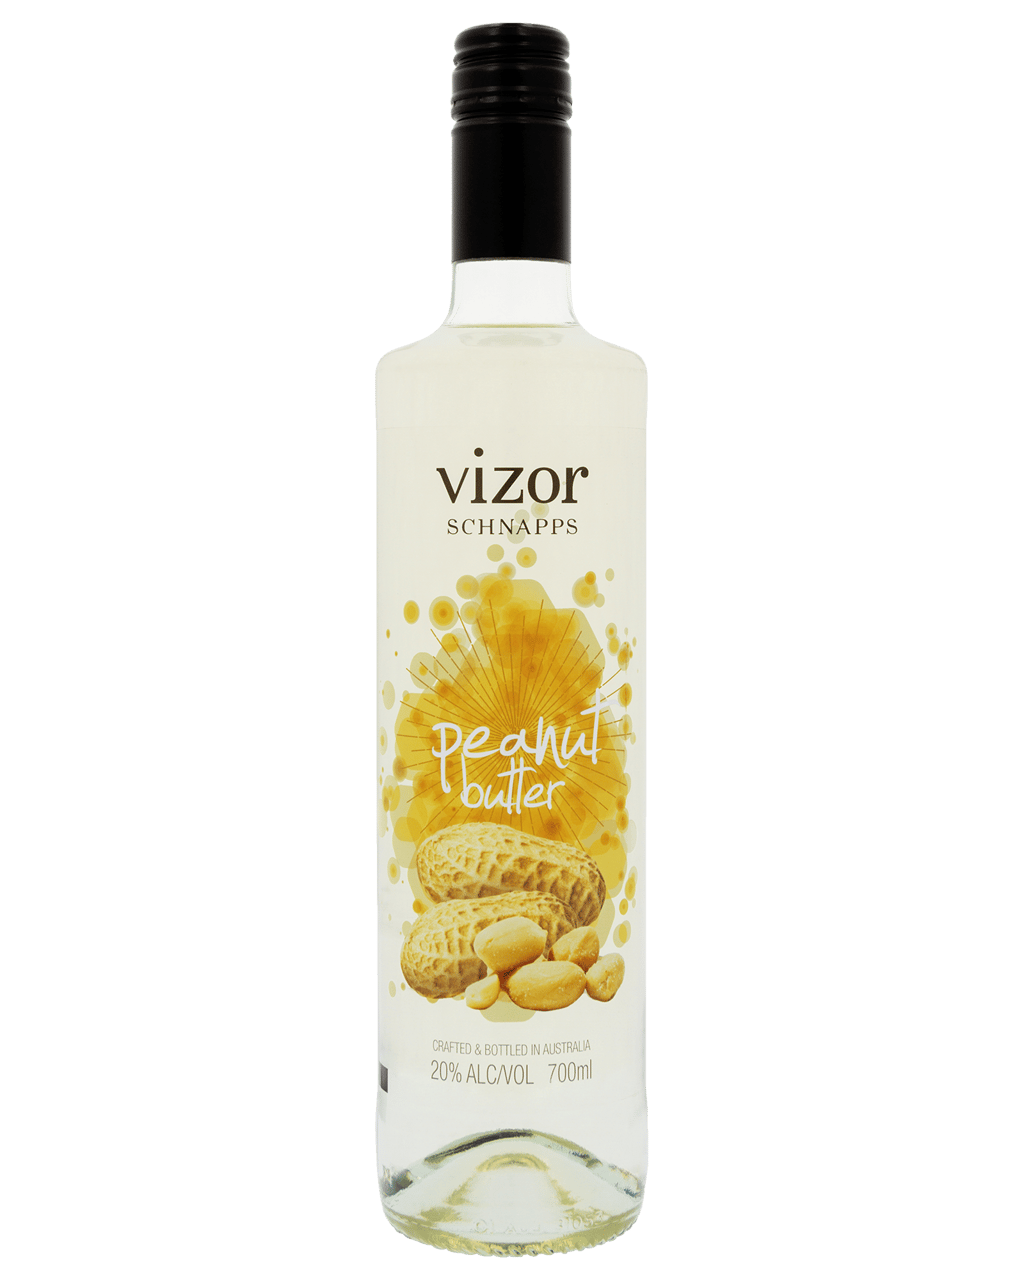 Vizor Schnapps Peanut Butter 700mL - Boozy